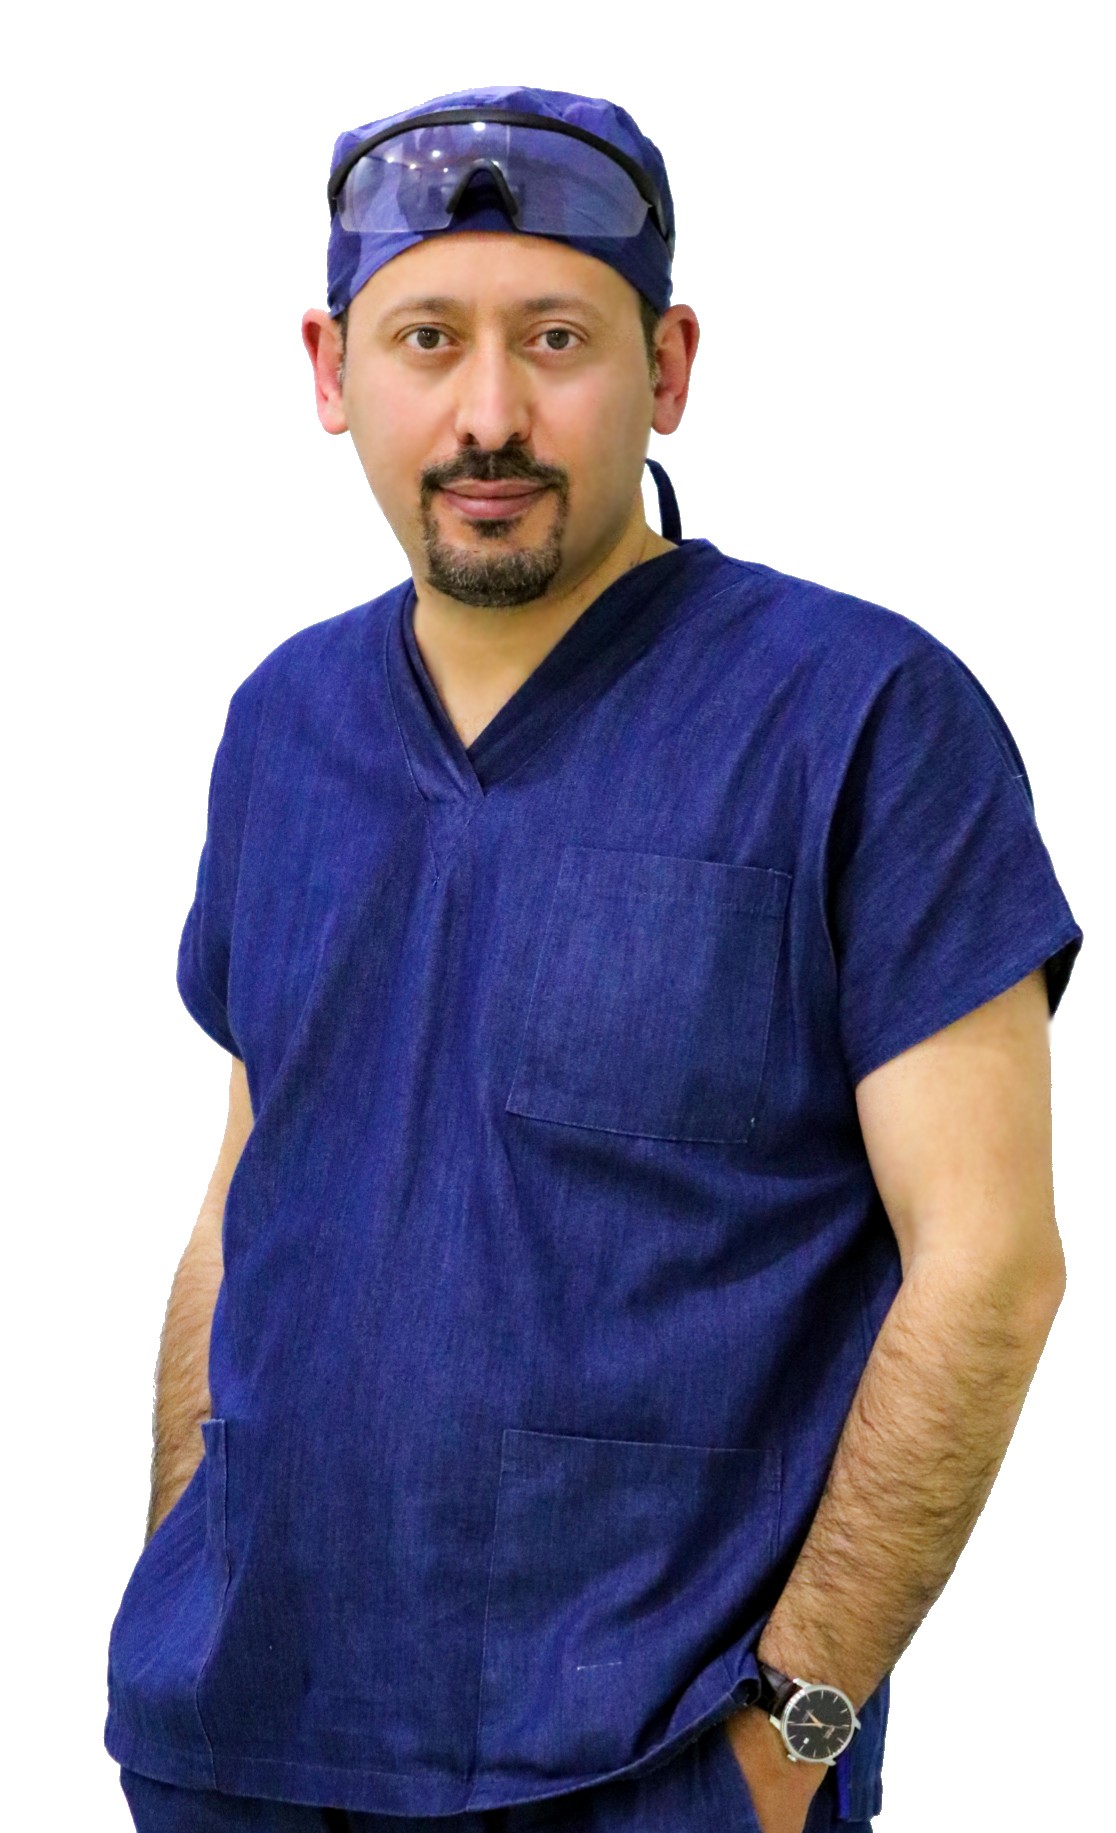 دکتر مجتبی صالحی